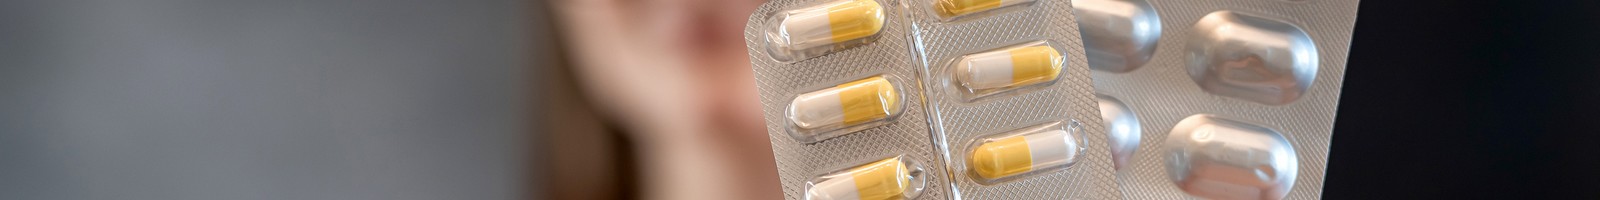 Recrudescence de la consommation d’antibiotiques en France